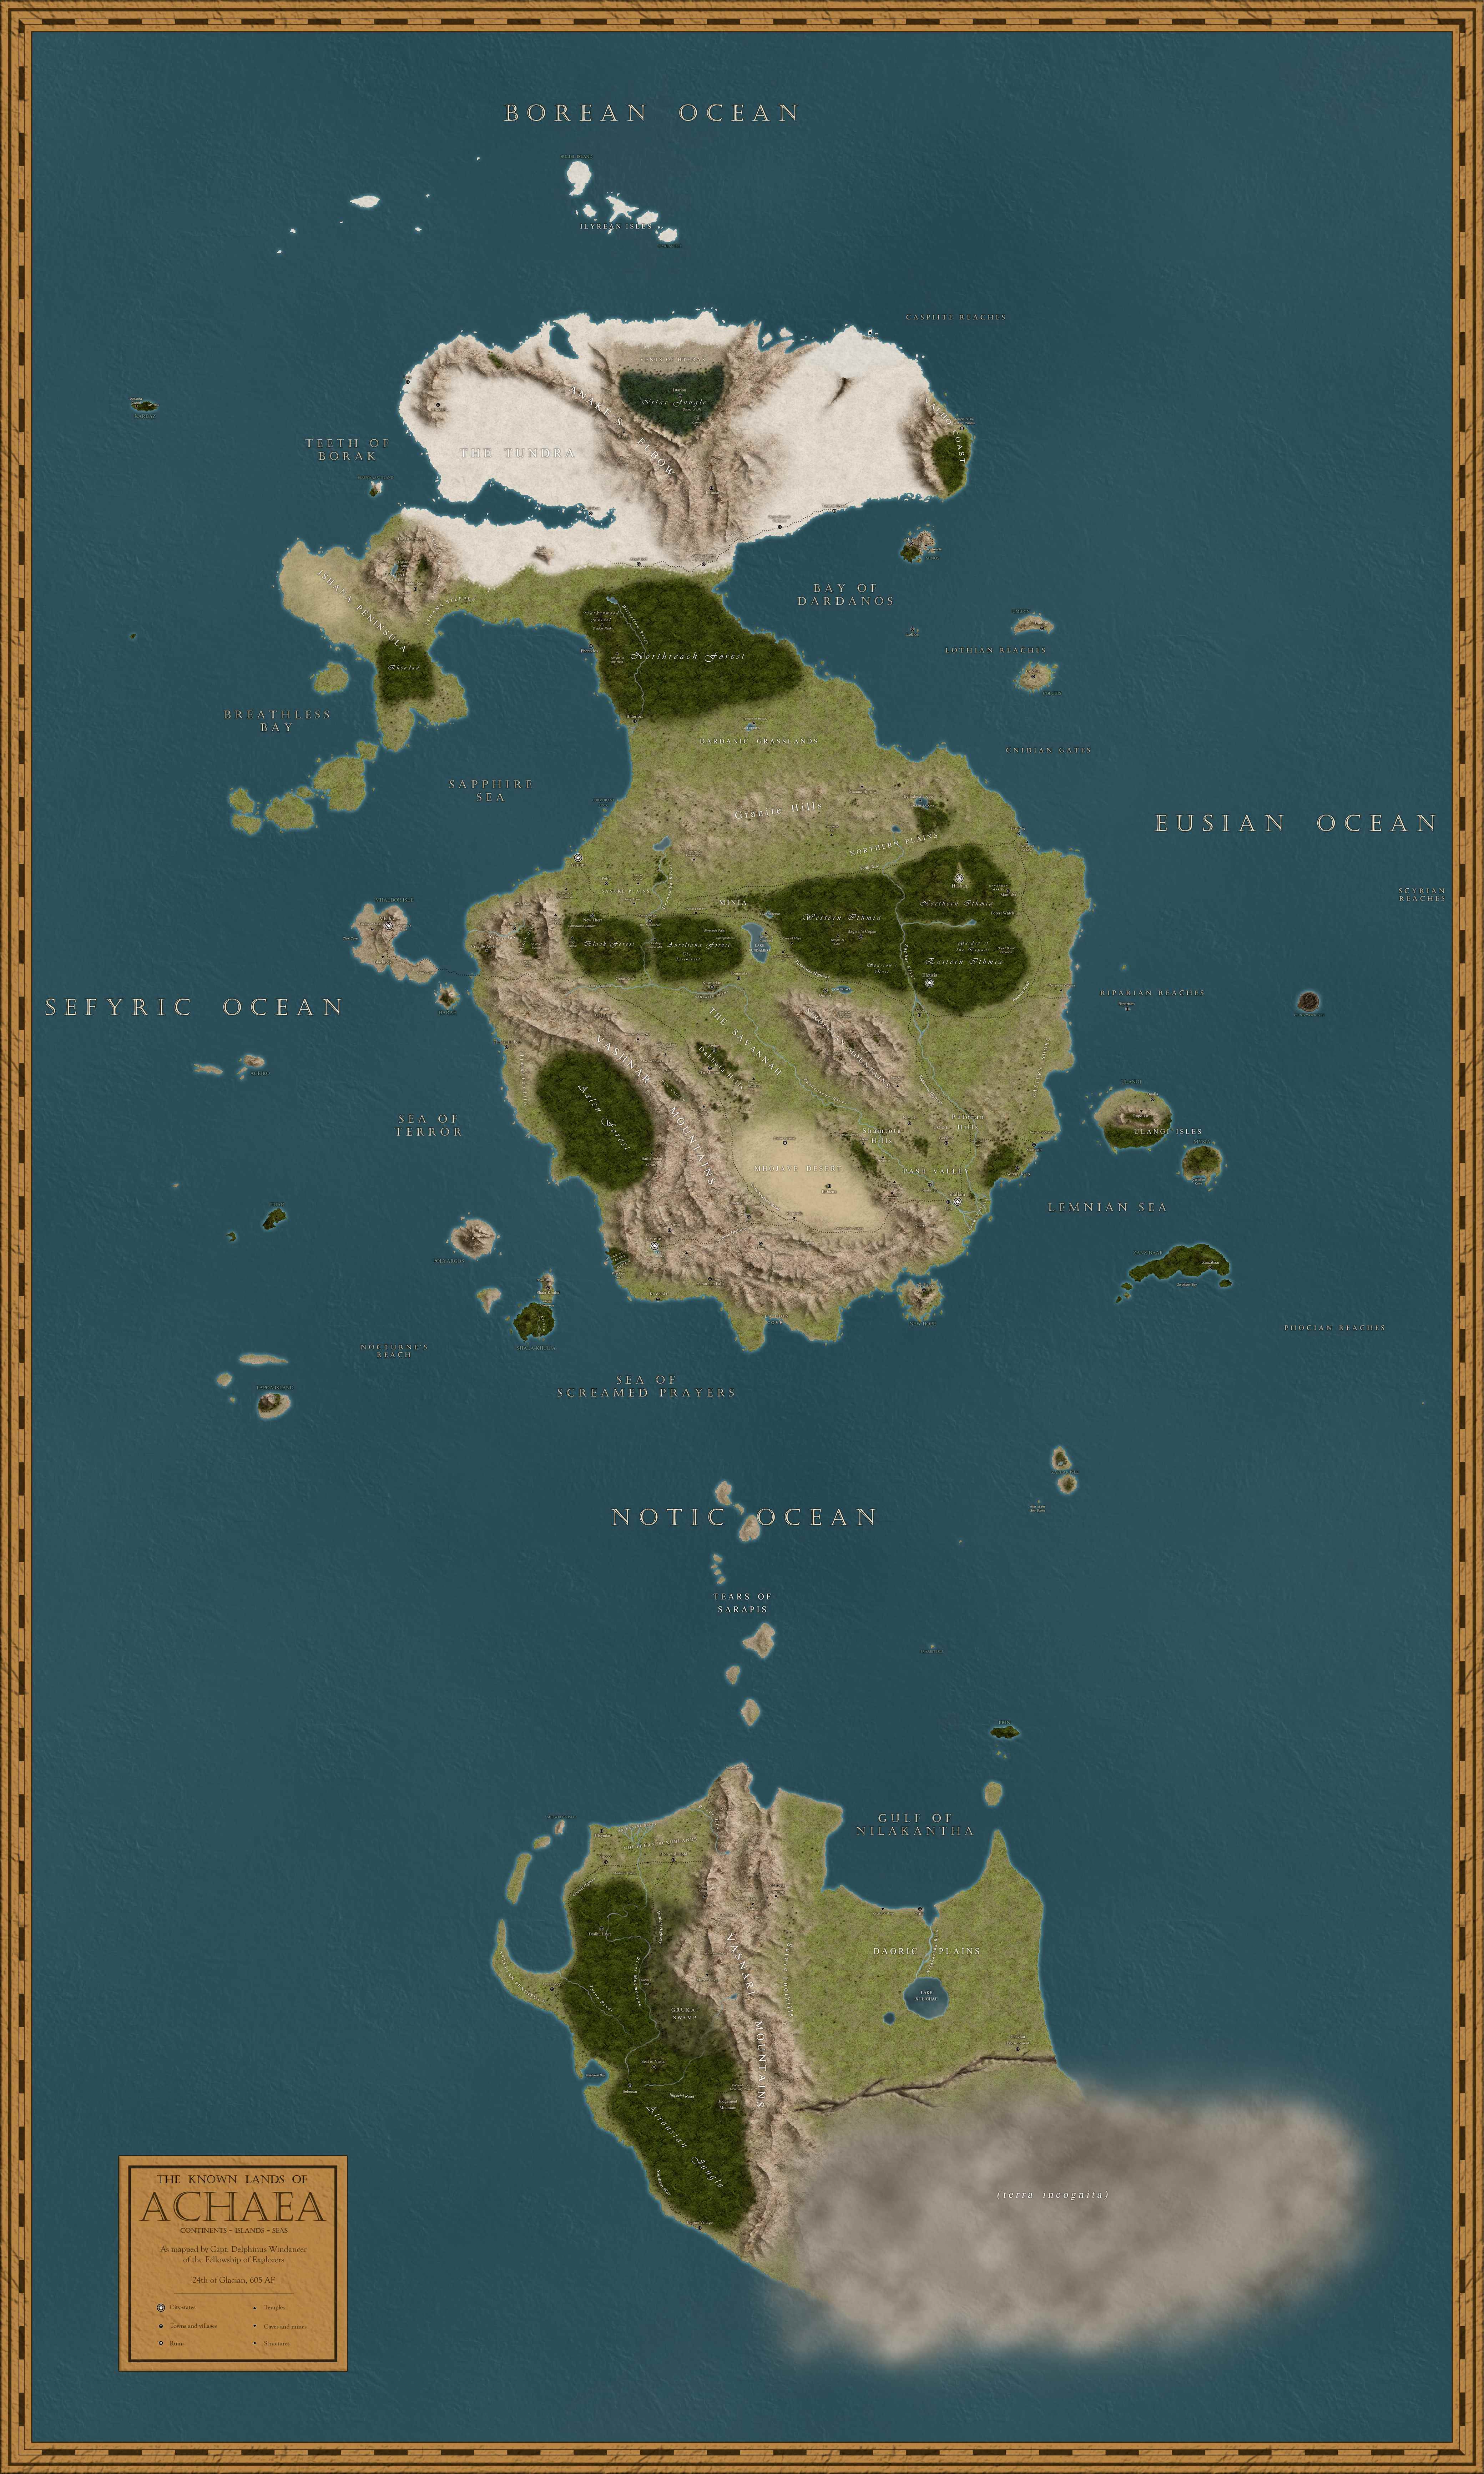 Delphinus worldmap.jpg